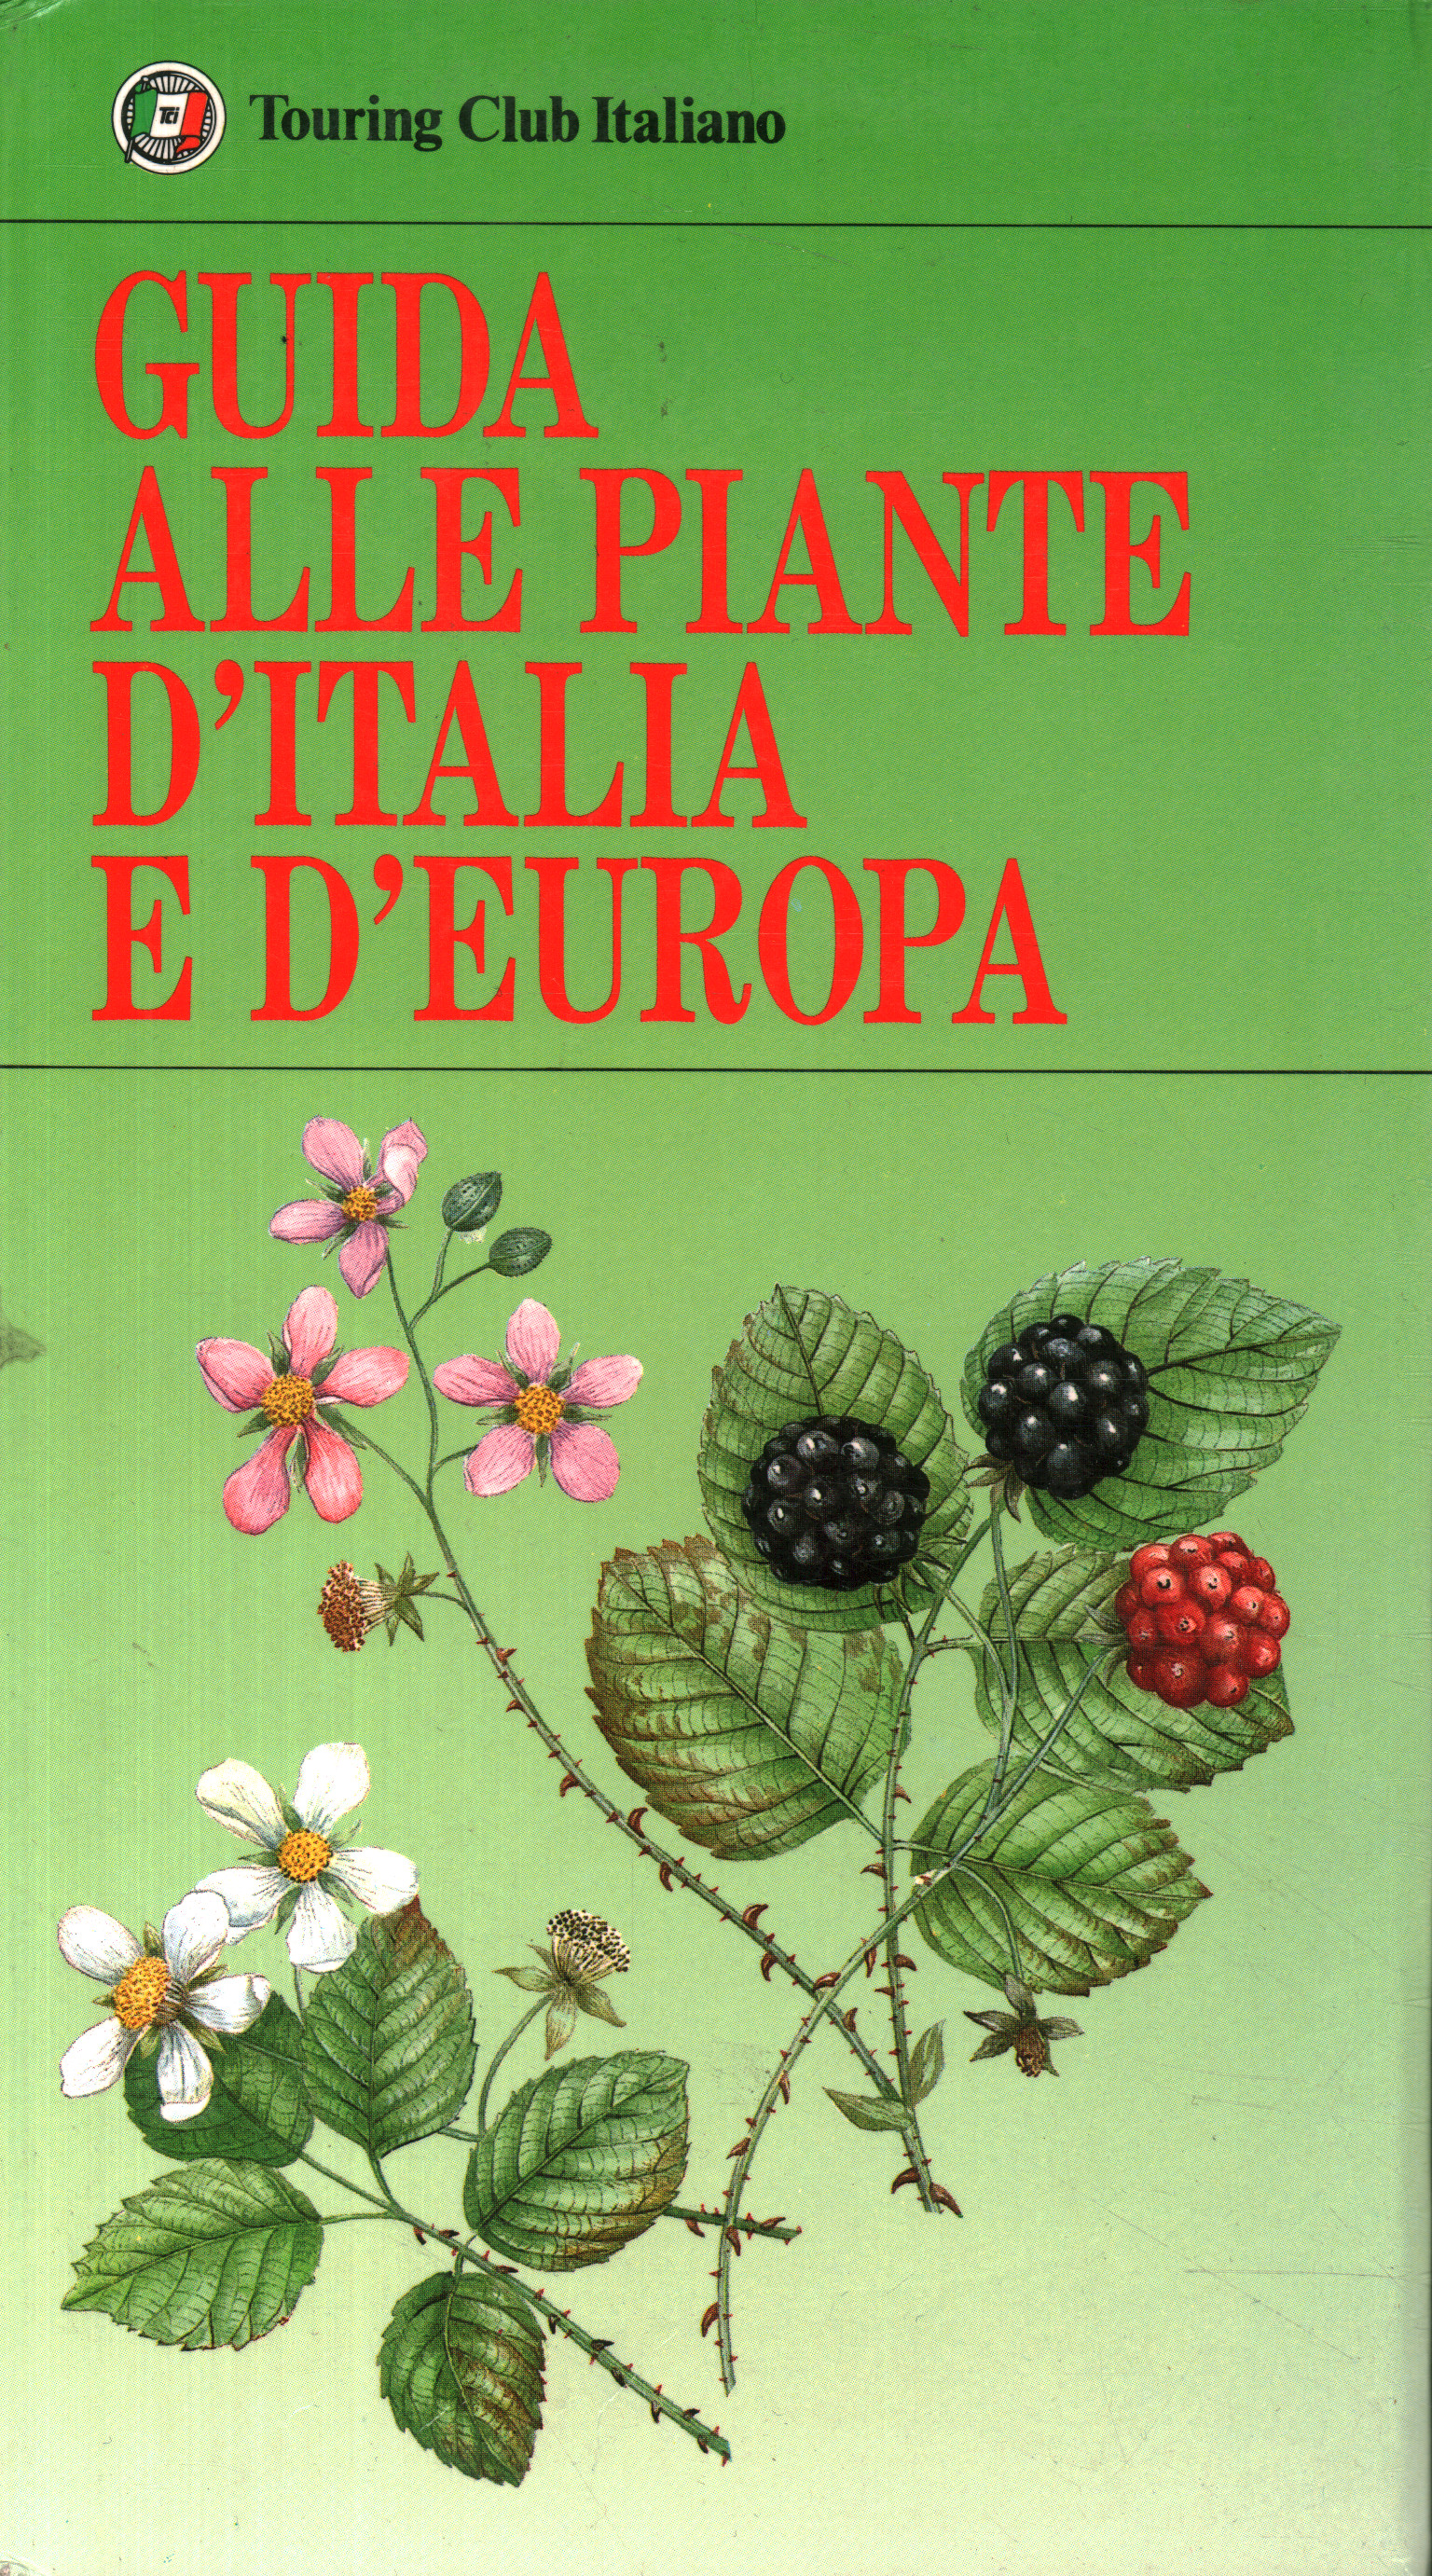 Guide des plantes d'Italie e